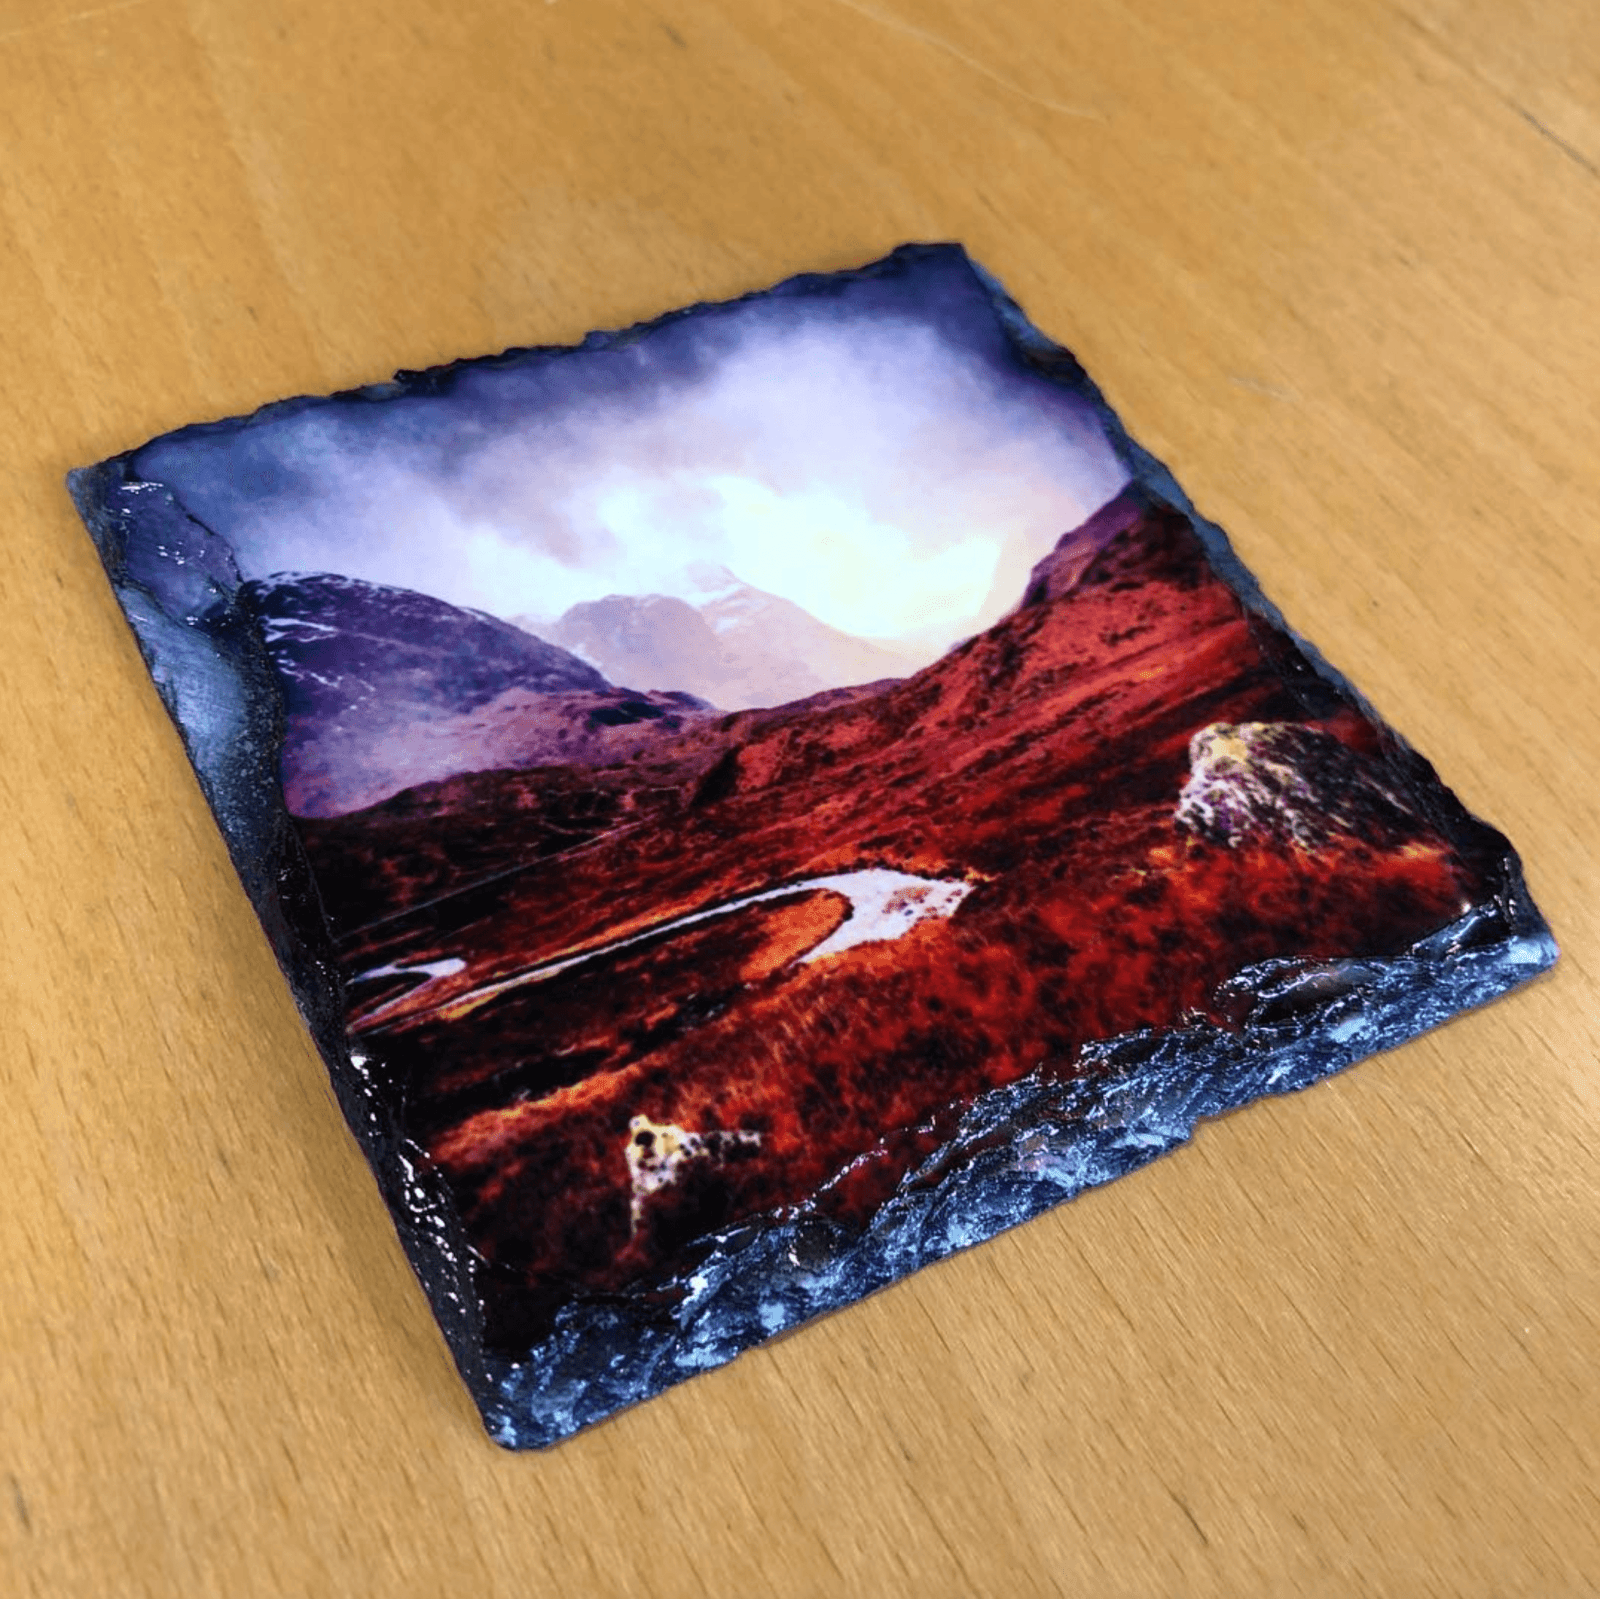 Brodgar Moonlight Orkney Slate Art-Slate Art-Orkney Art Gallery-Paintings, Prints, Homeware, Art Gifts From Scotland By Scottish Artist Kevin Hunter